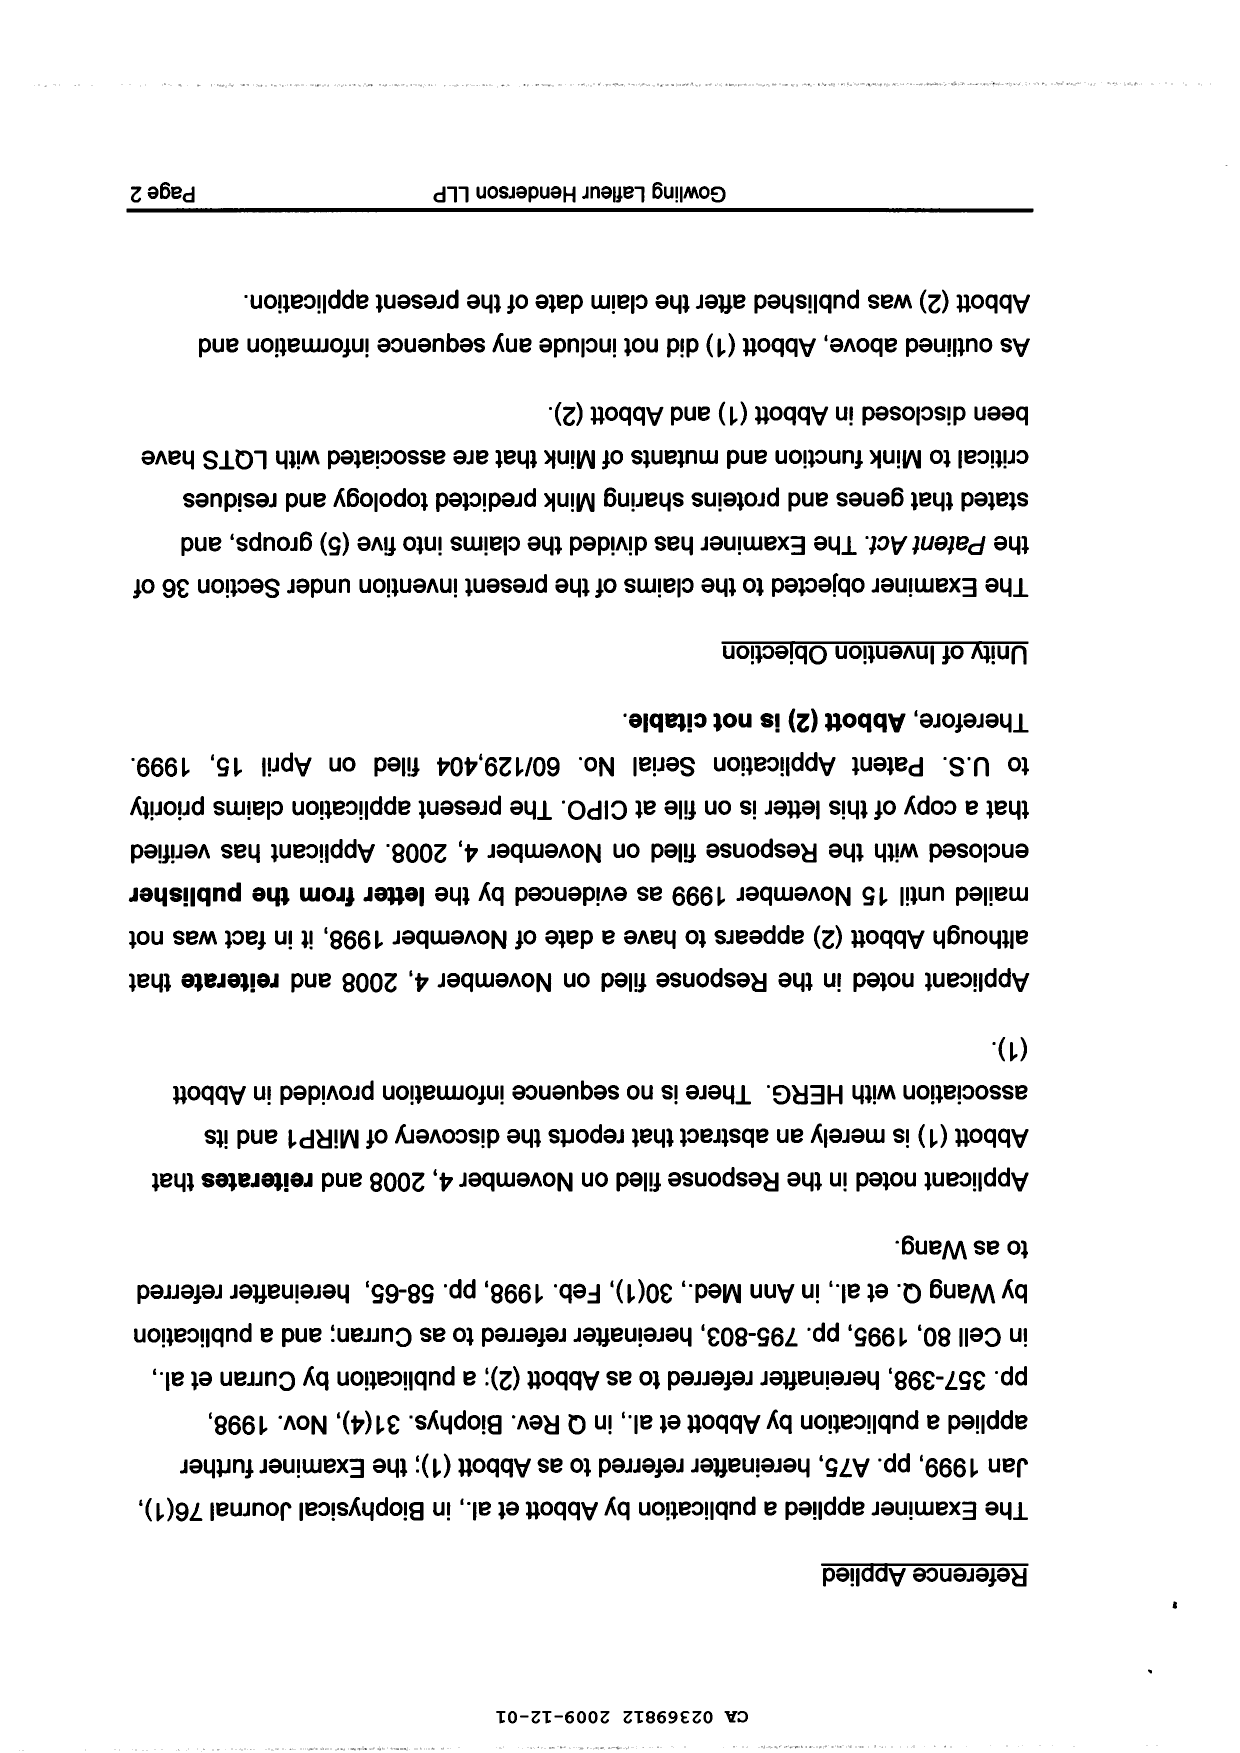 Canadian Patent Document 2369812. Prosecution-Amendment 20081201. Image 2 of 7